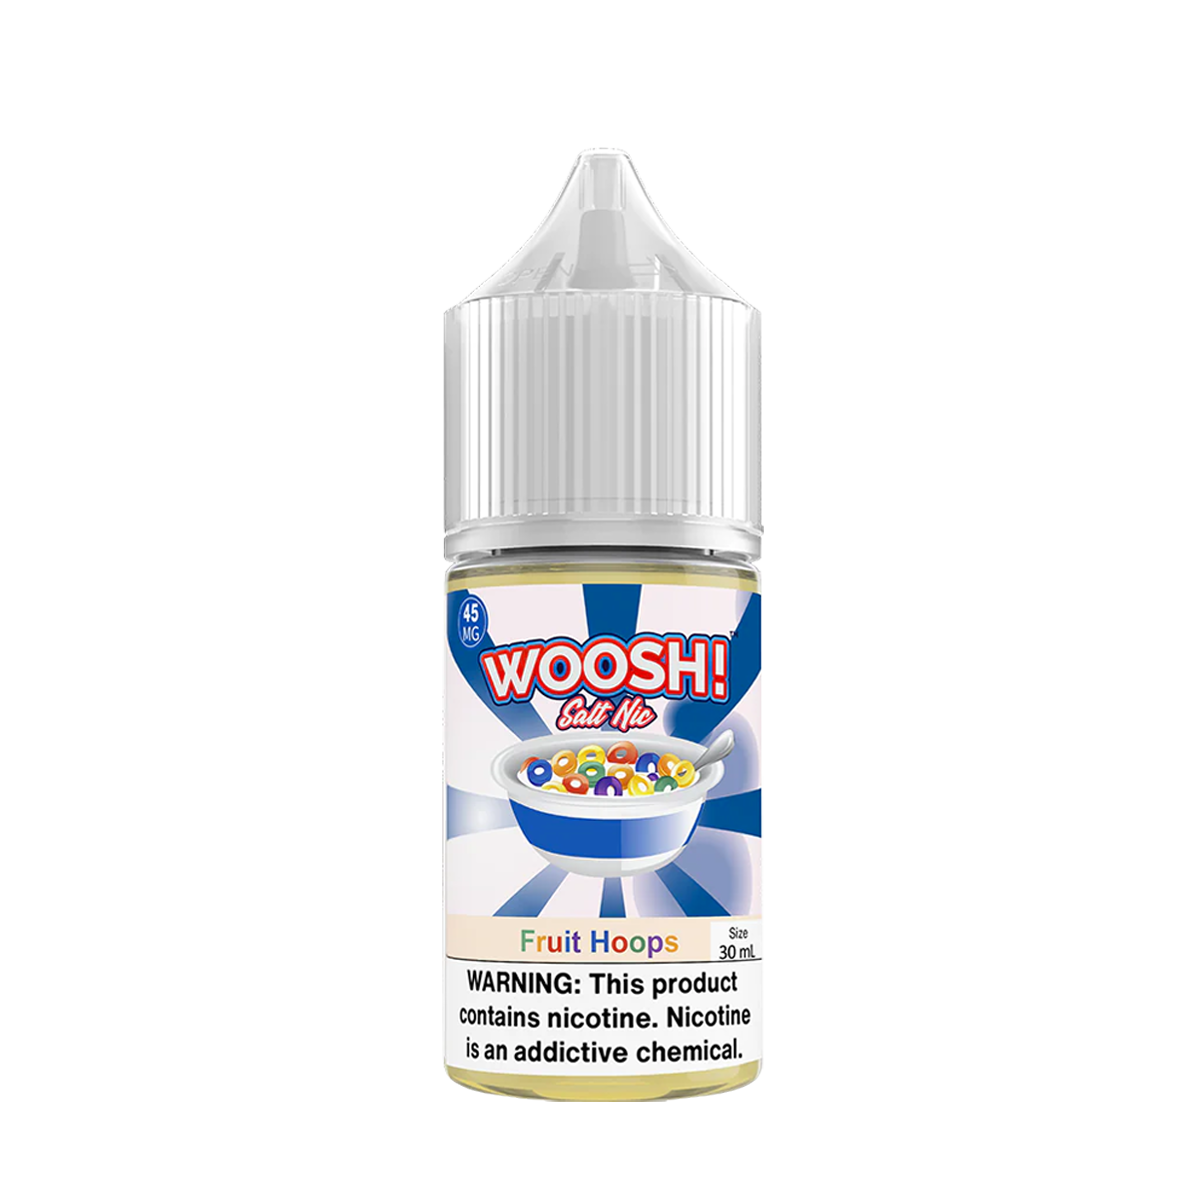 Suorin Woosh Salt Nicontine Vape Juice 45 Mg 30 Ml Fruit Hoops